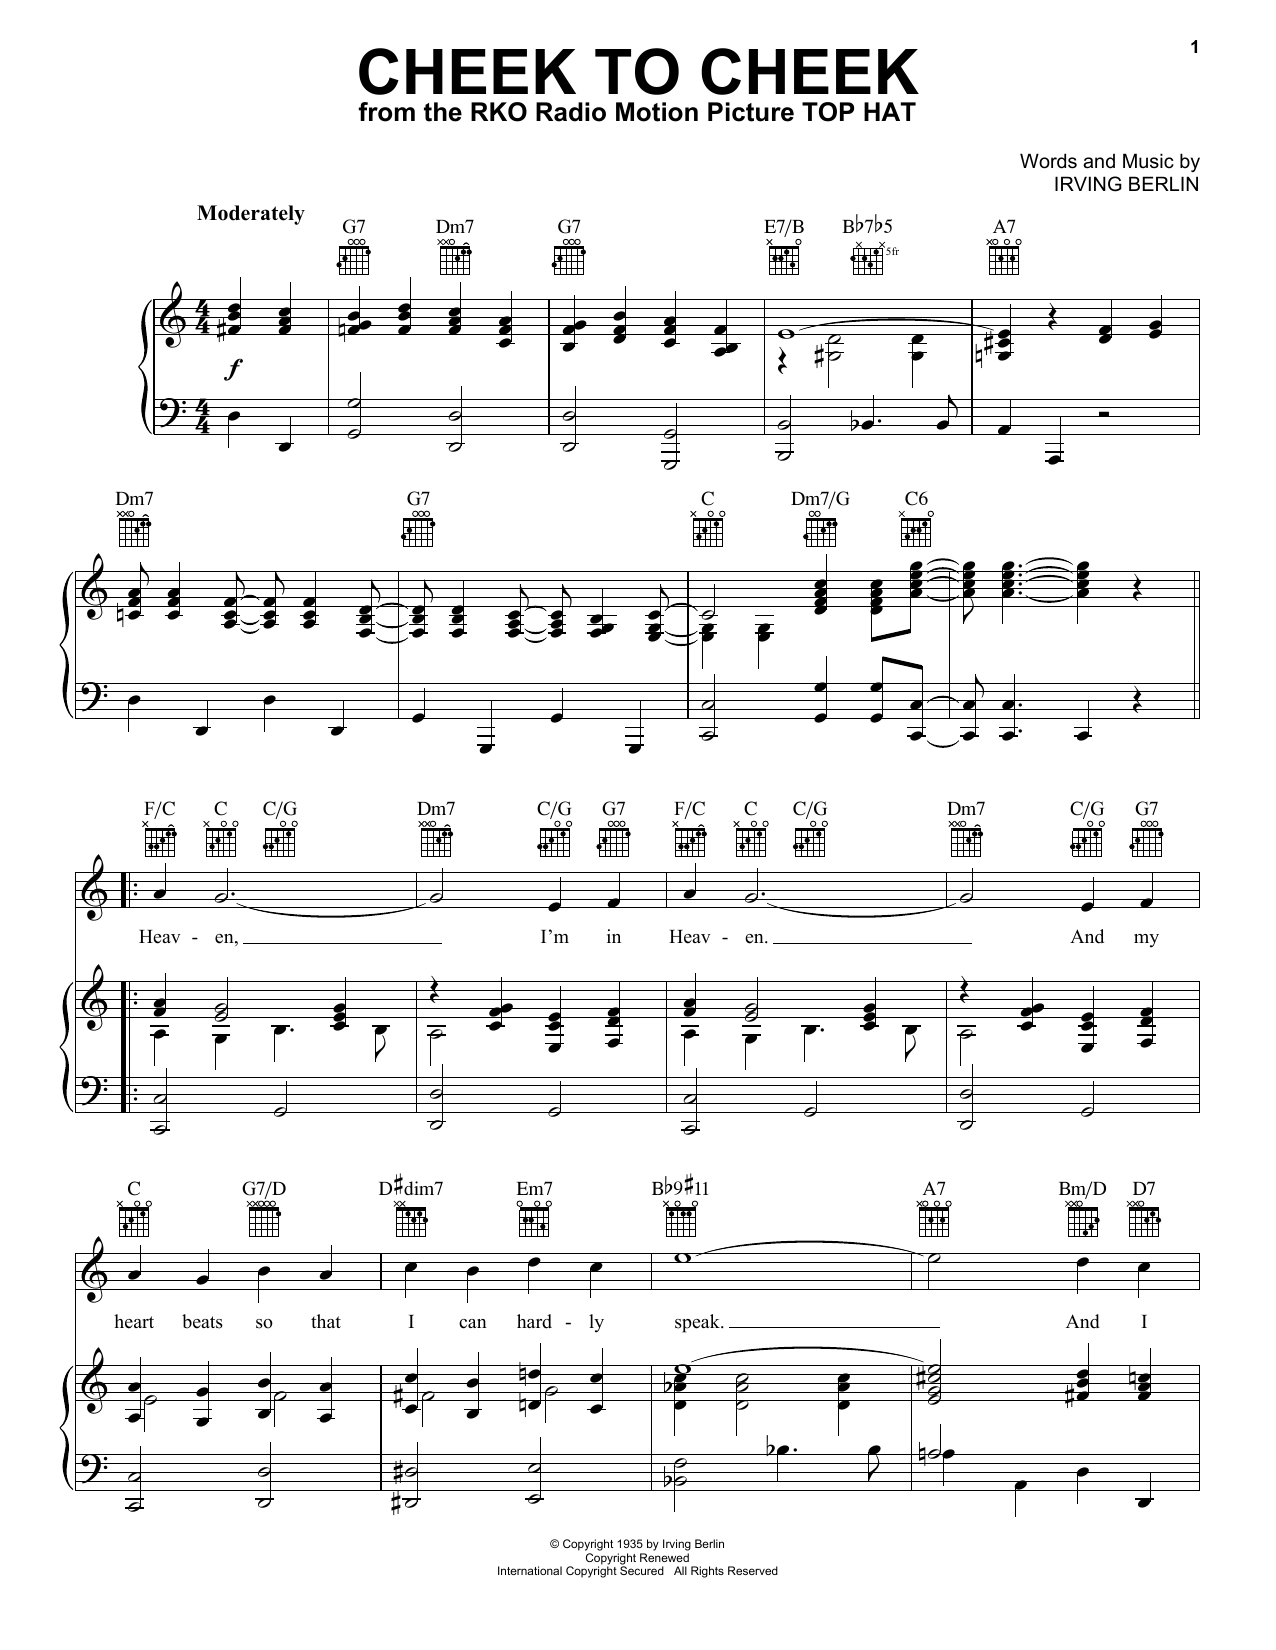 Irving Berlin Cheek To Cheek Sheet Music Notes & Chords for Banjo - Download or Print PDF